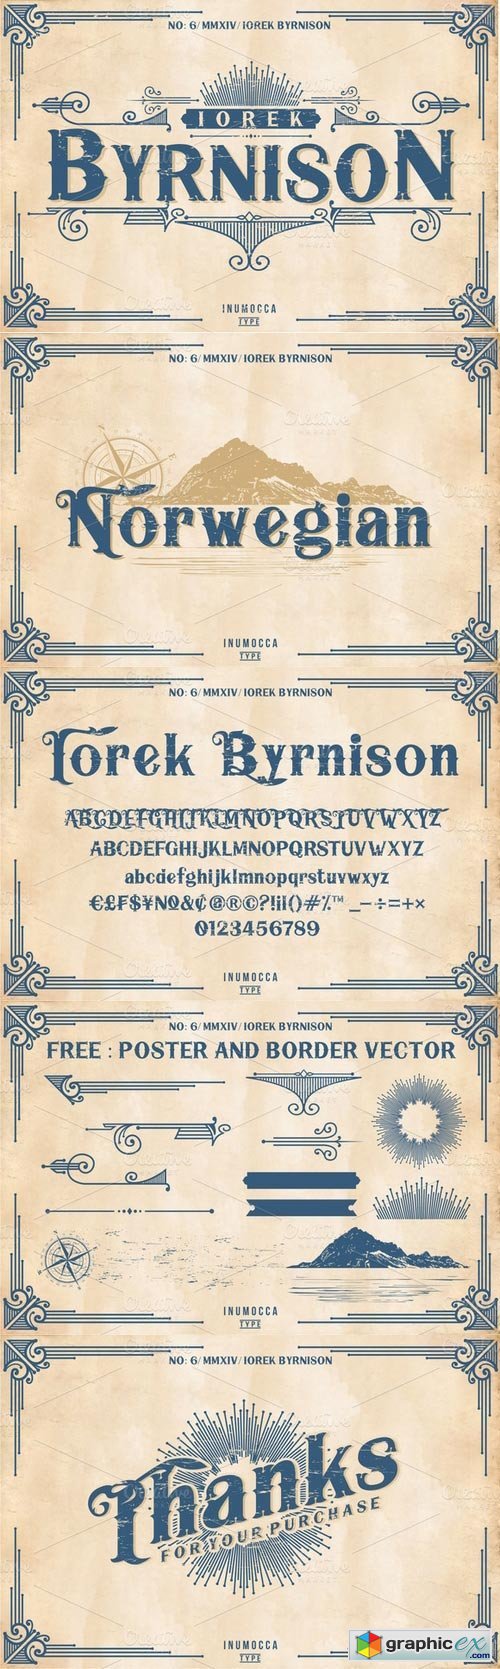 Iorek Byrnison (free POSTER vector)